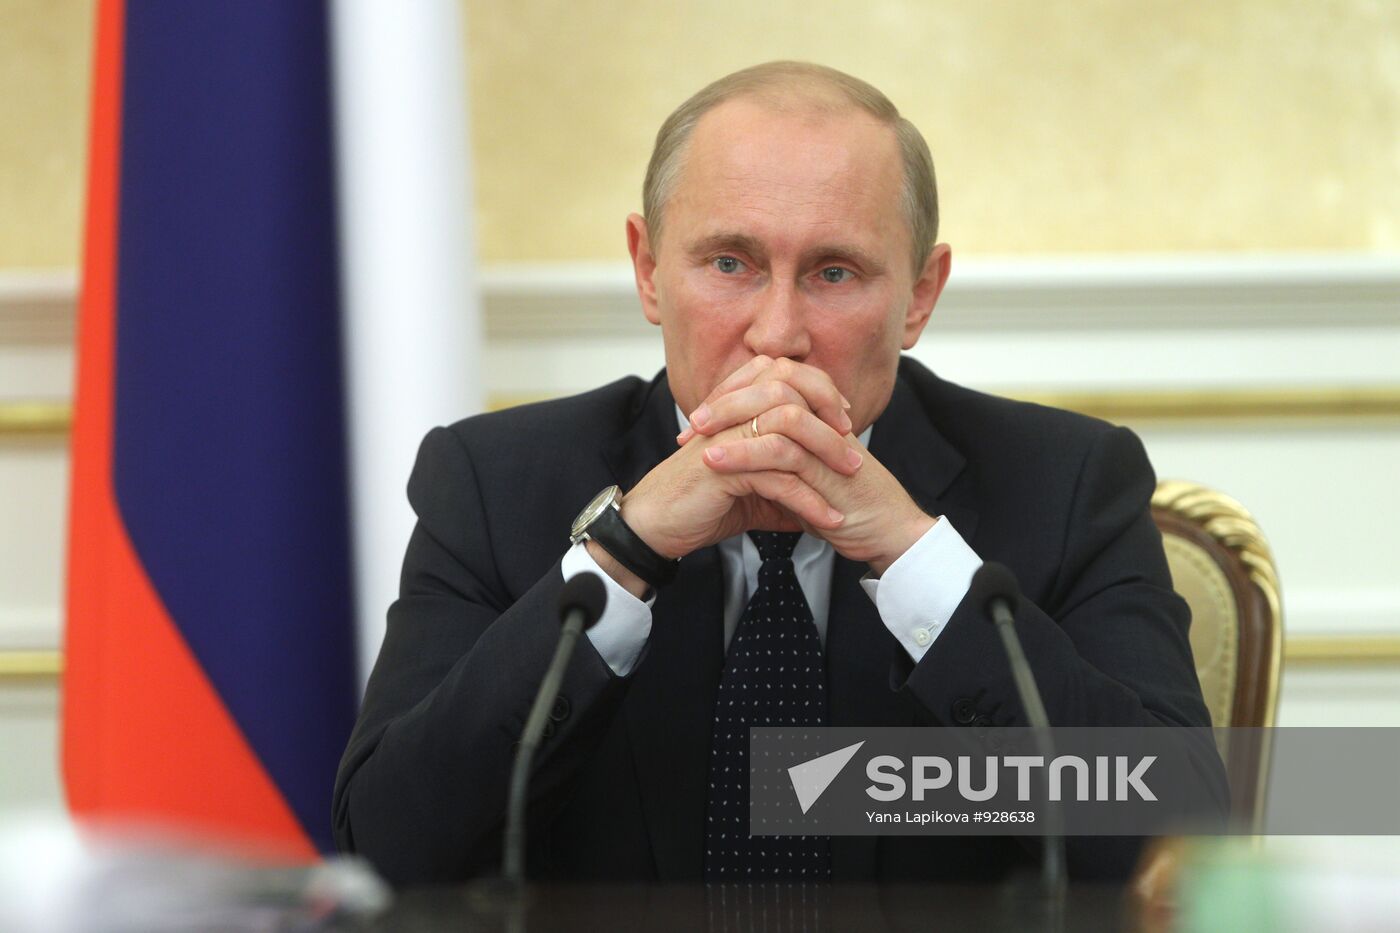 Putin chairs Russian Government Presidium meeting